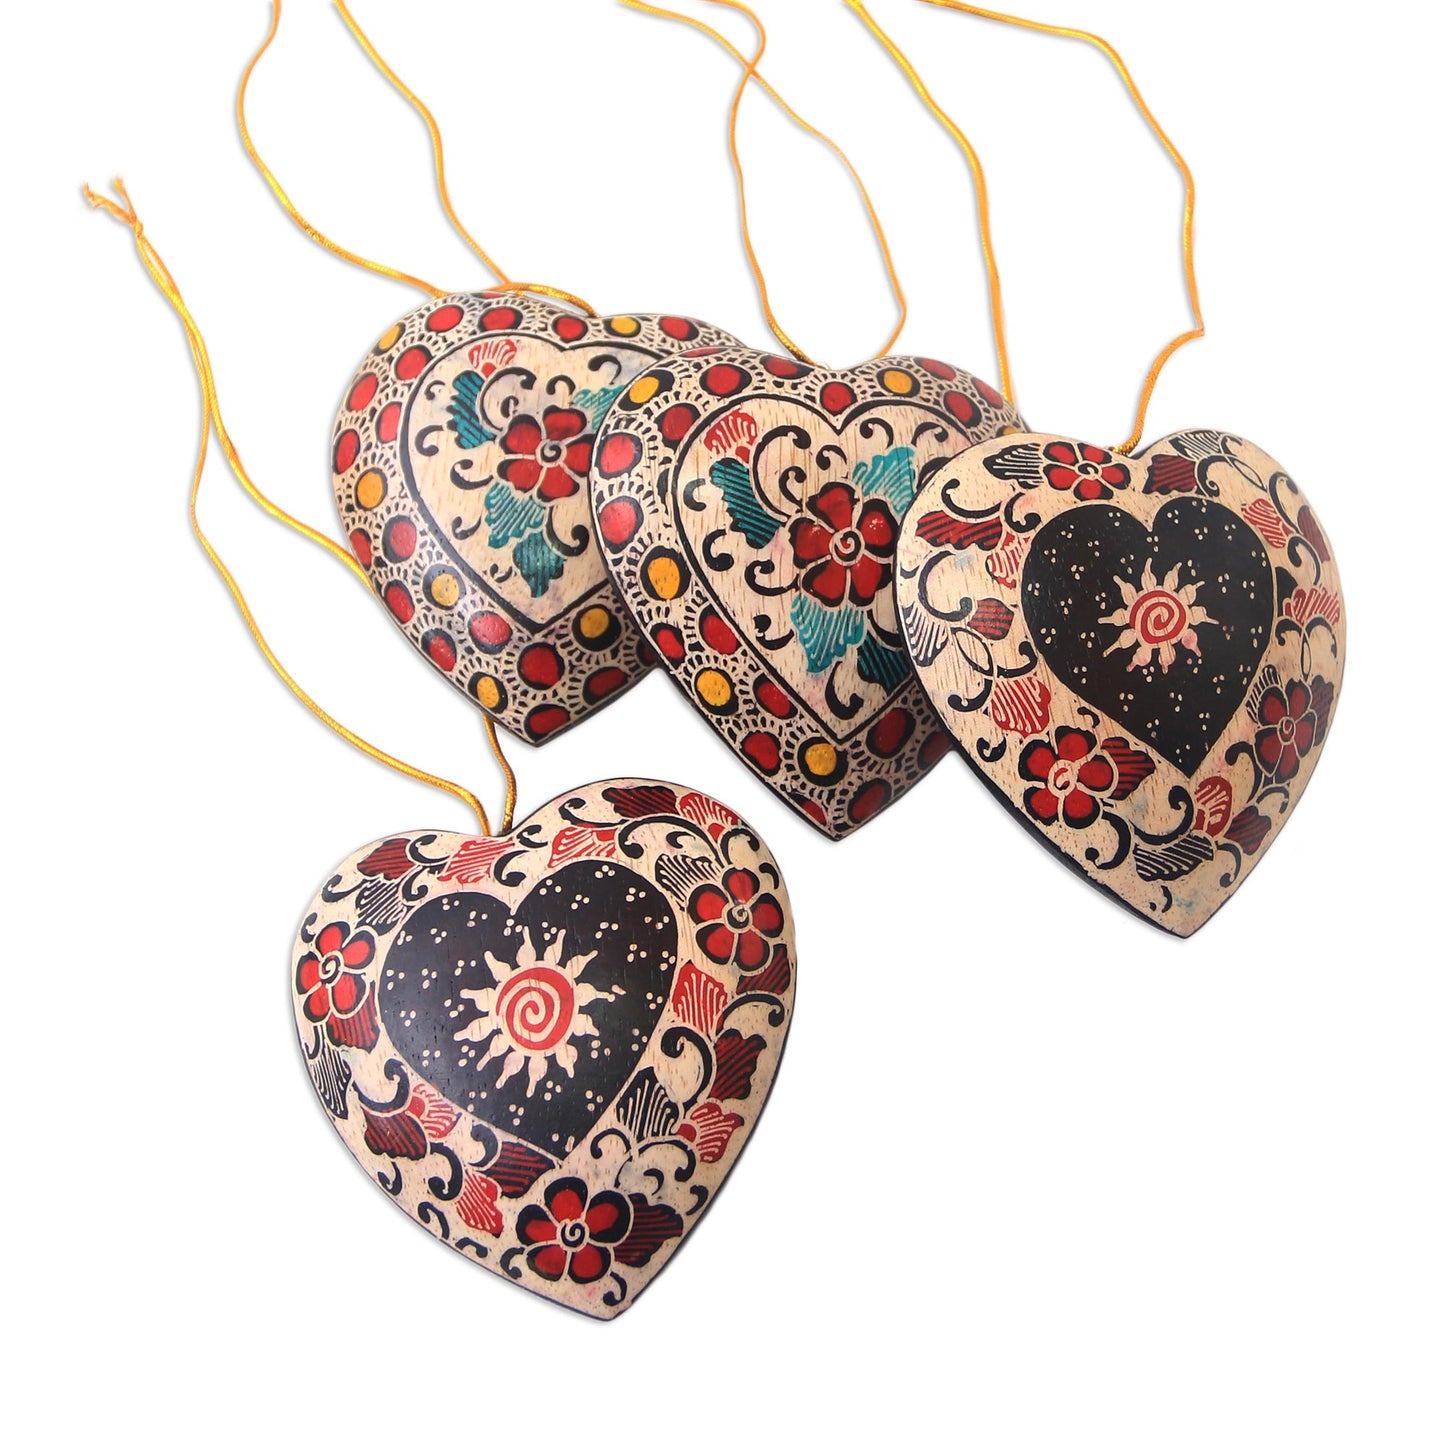 Heart Flowers Floral Batik Wood Heart Ornaments from Java (Set of 4)